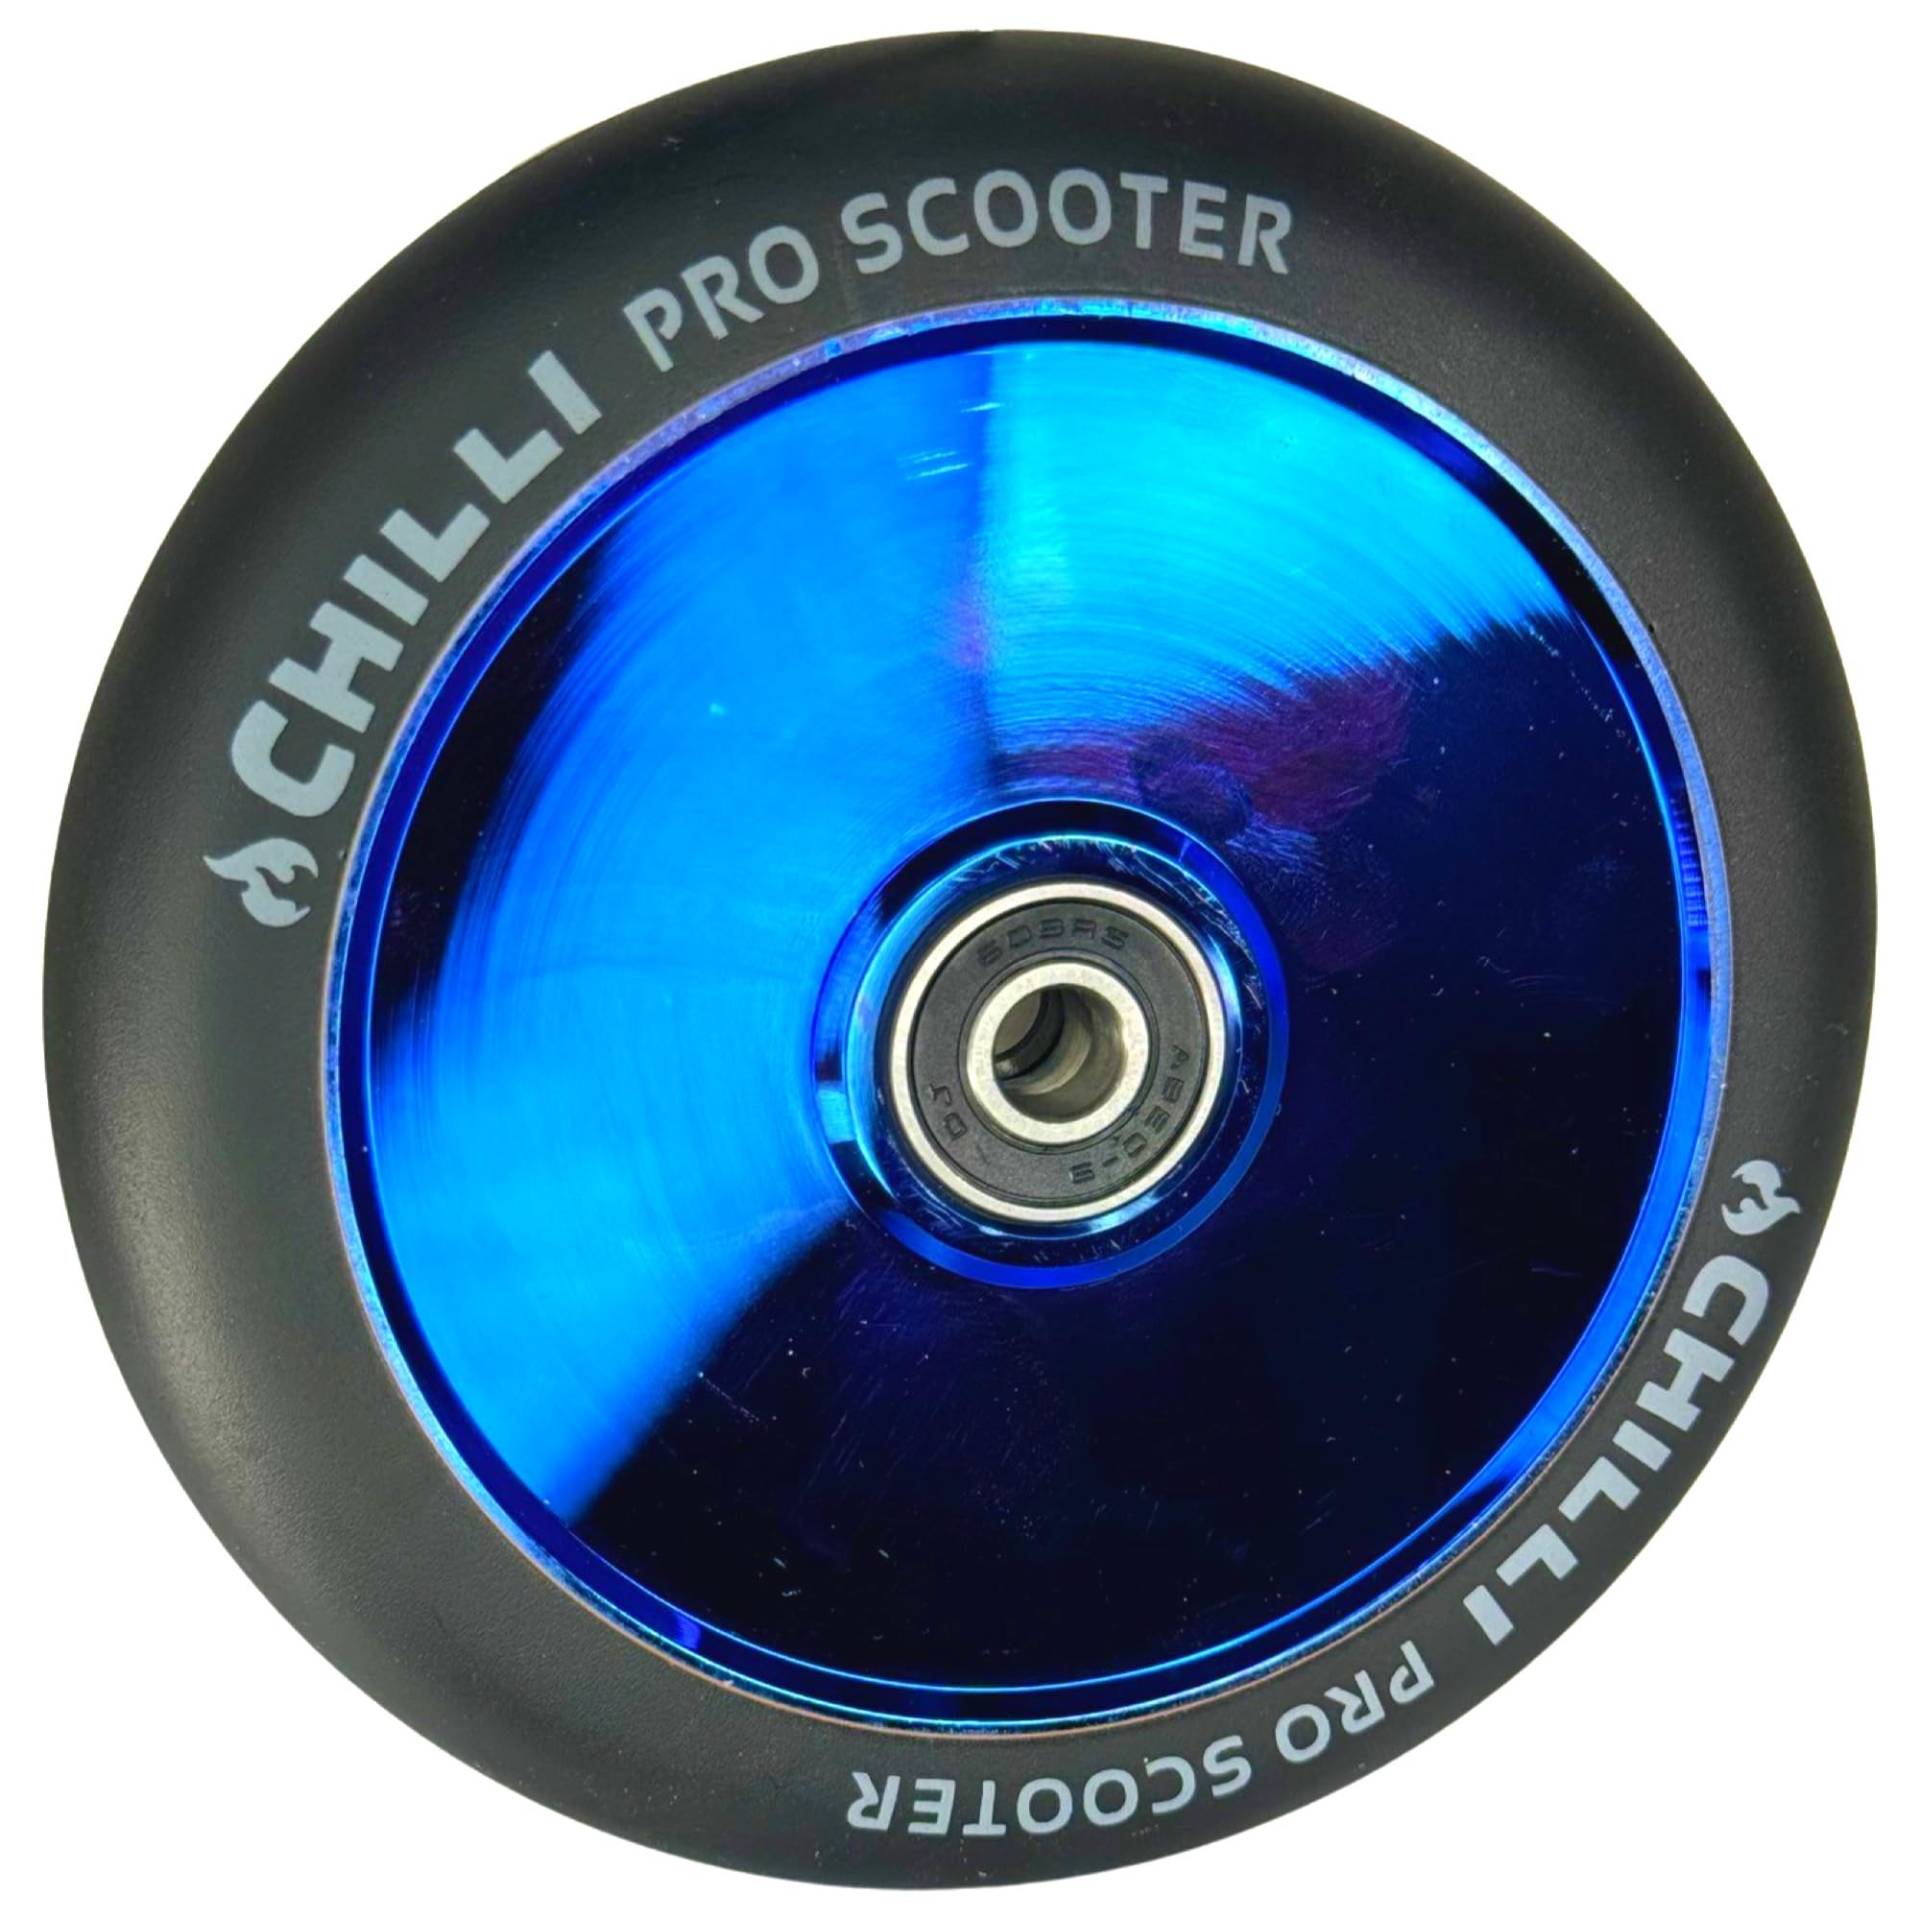 Chilli Pro Scooter Hollowcore Stunt-Scooter Rolle 120mm I Trick I Tret I Roller I Wheel I Abec 9 Kugellager I Blauchrome von F26